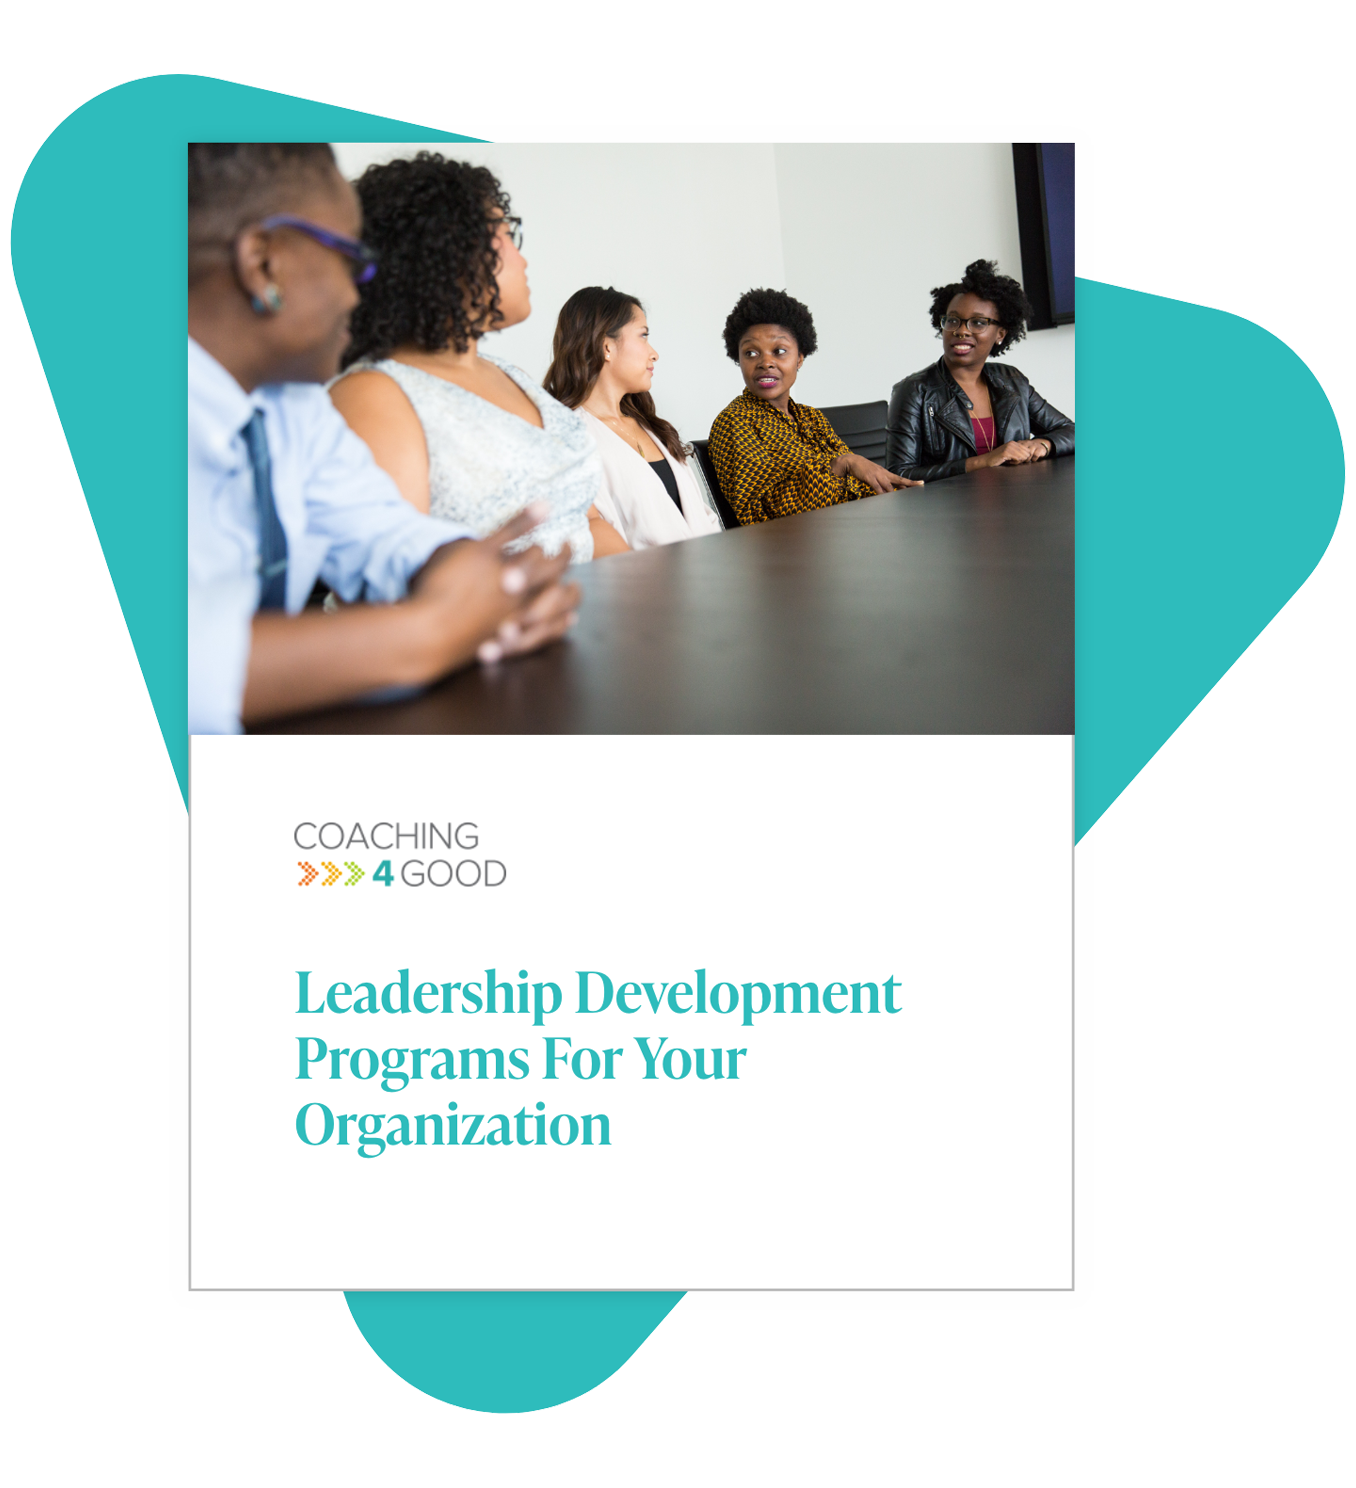 Leadership development programs for your organization